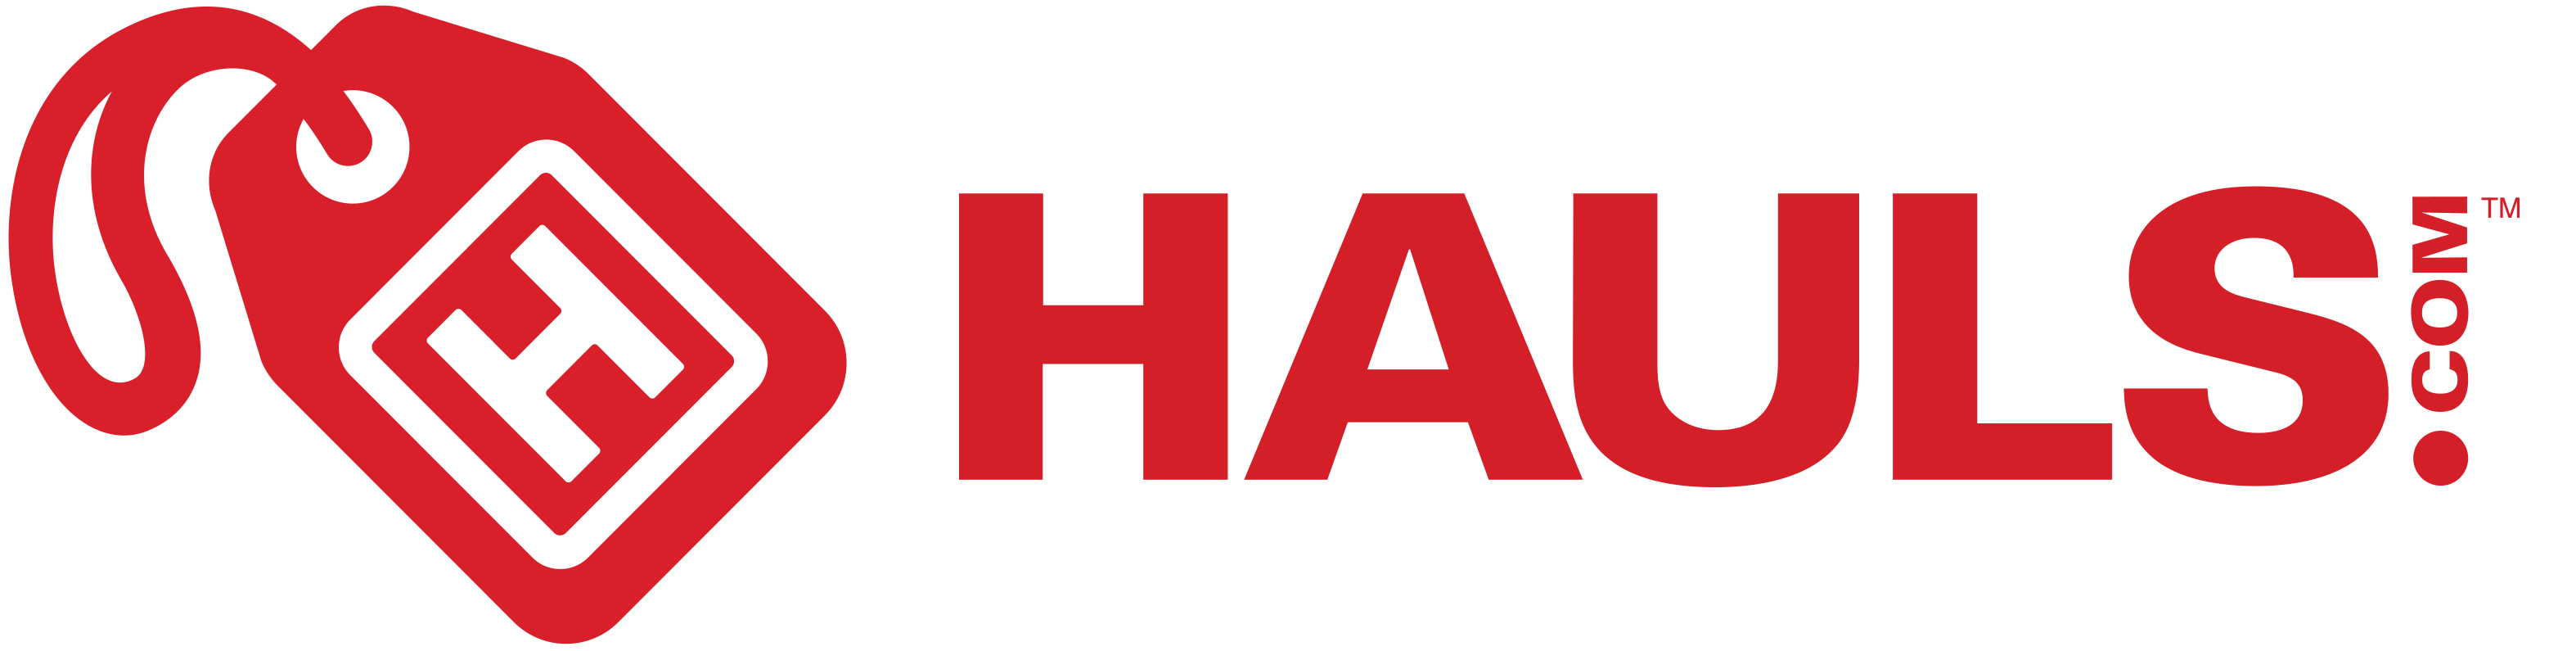 Hauls.com_logo_horizontal_v21